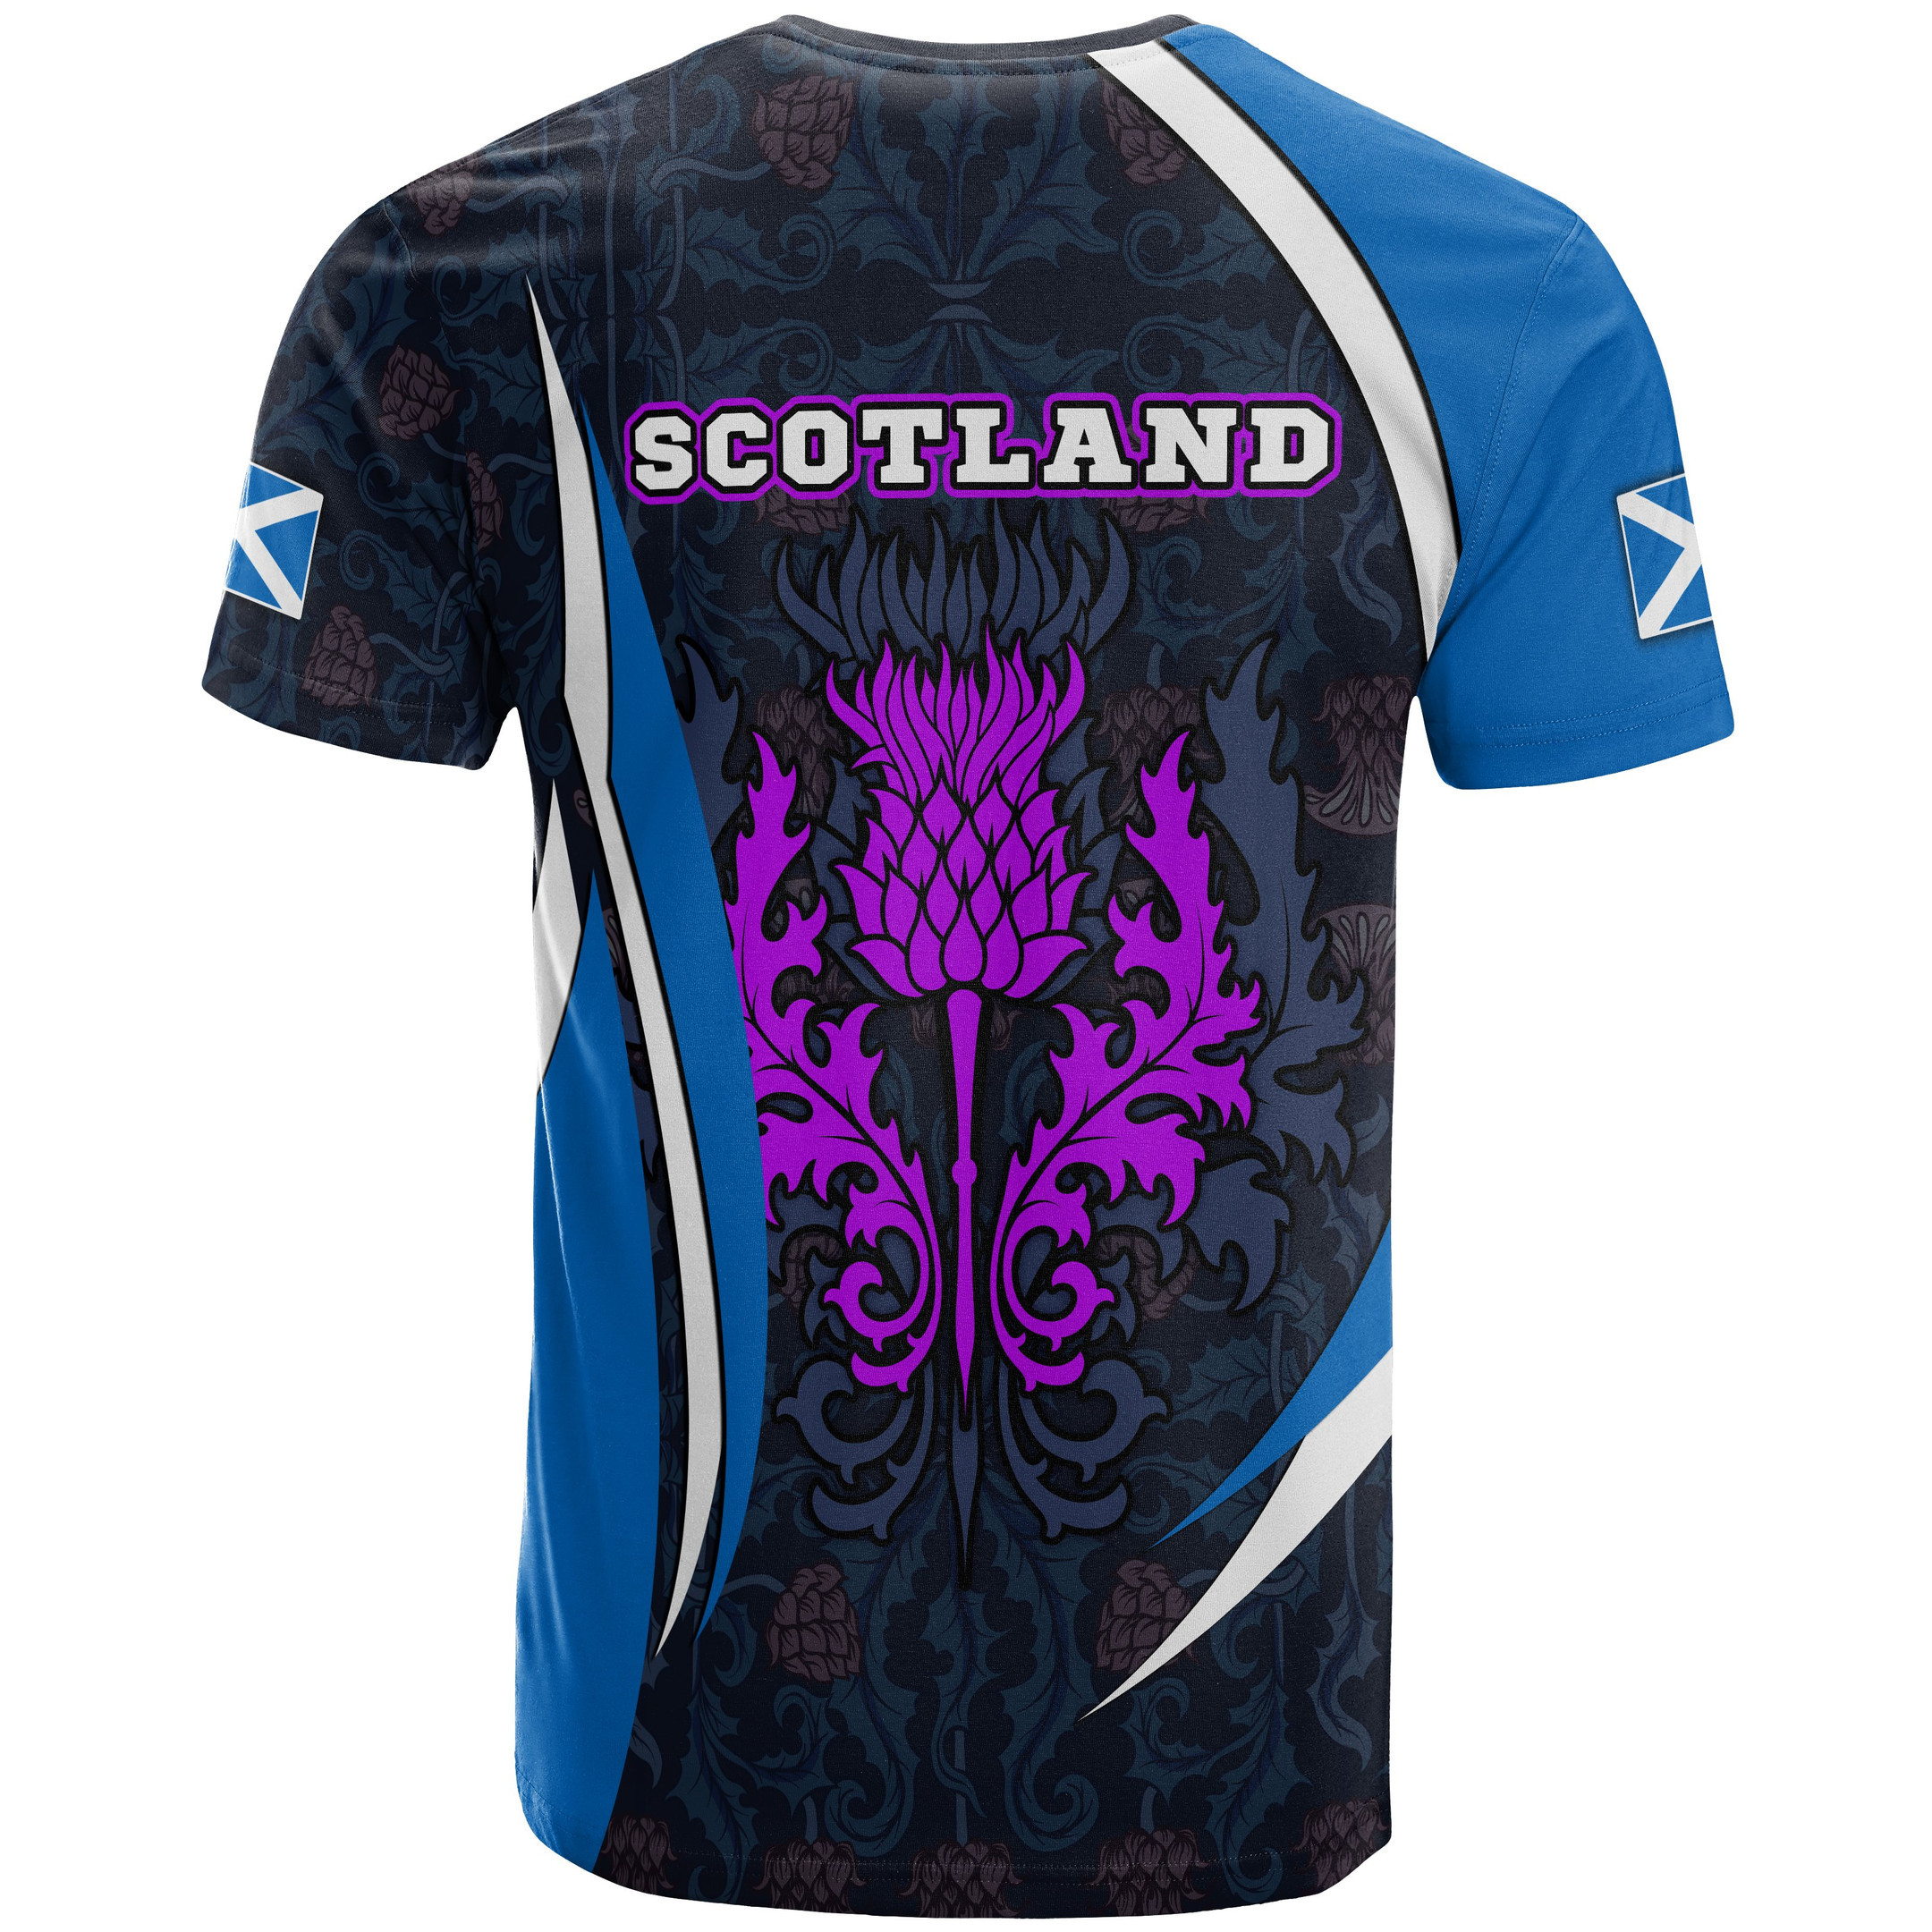 Scotland T-shirt - Scotland Spirit (Thistle)